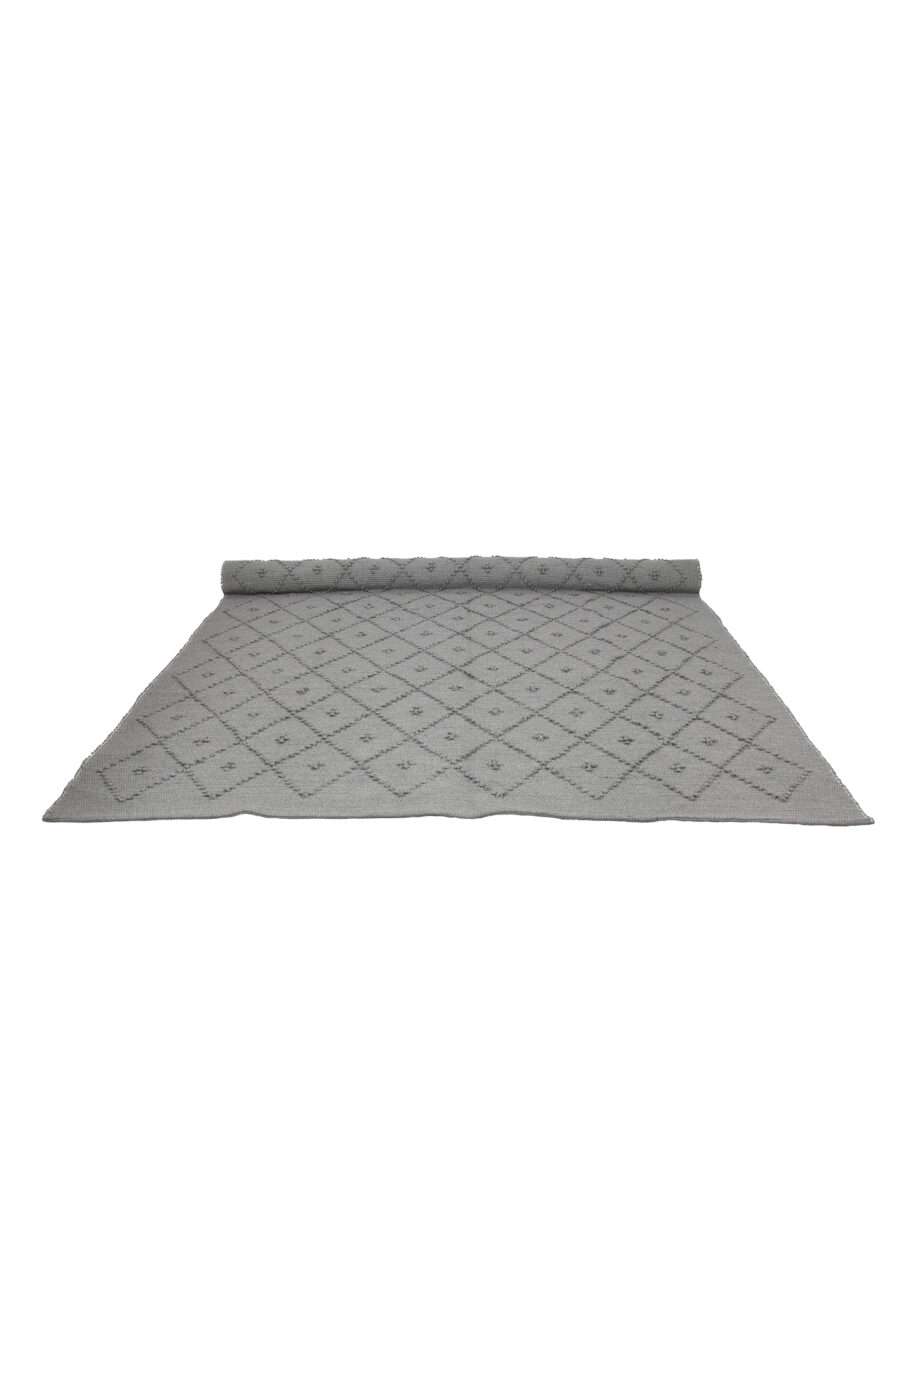 plan-b-rug diamond light grey xlarge